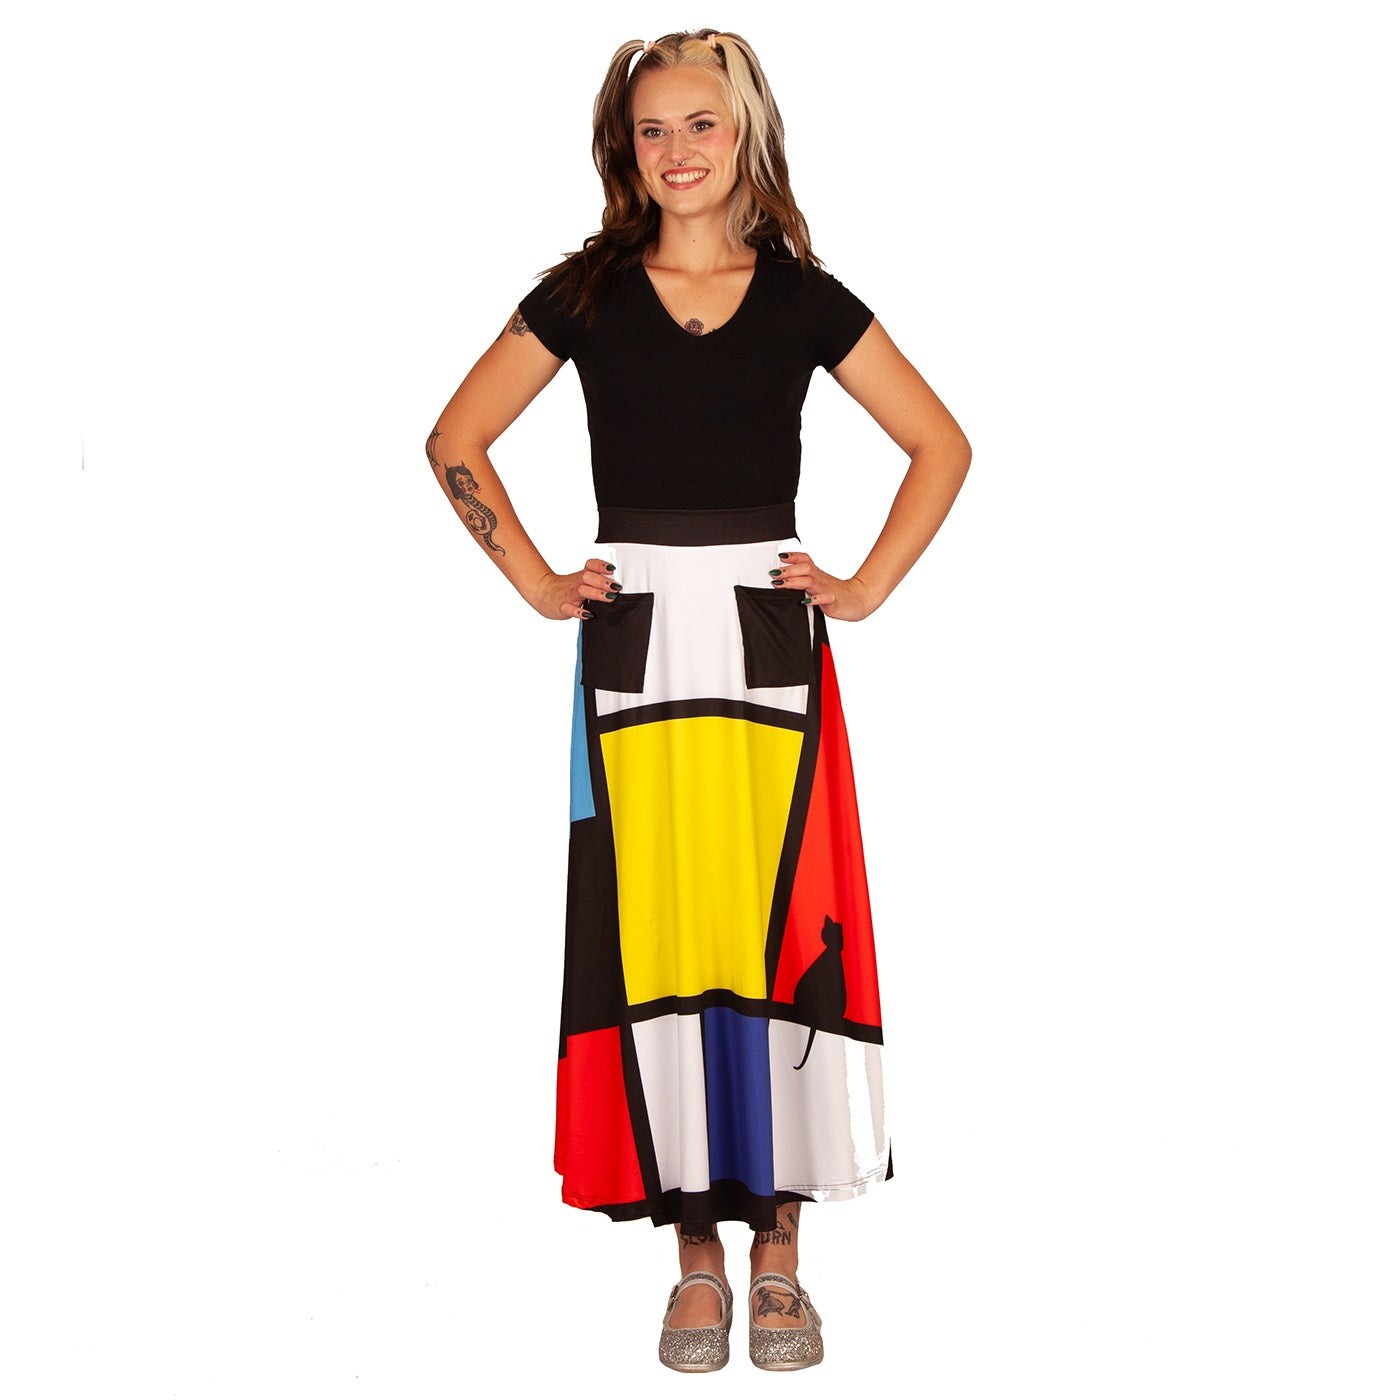 Intrigue Maxi Skirt by RainbowsAndFairies.com.au (Black Cats - Mondrian Art - Check Print - Skirt With Pockets - Boho - Mod Retro - Vintage Inspired) - SKU: CL_MAXIS_INTRG_ORG - Pic-06